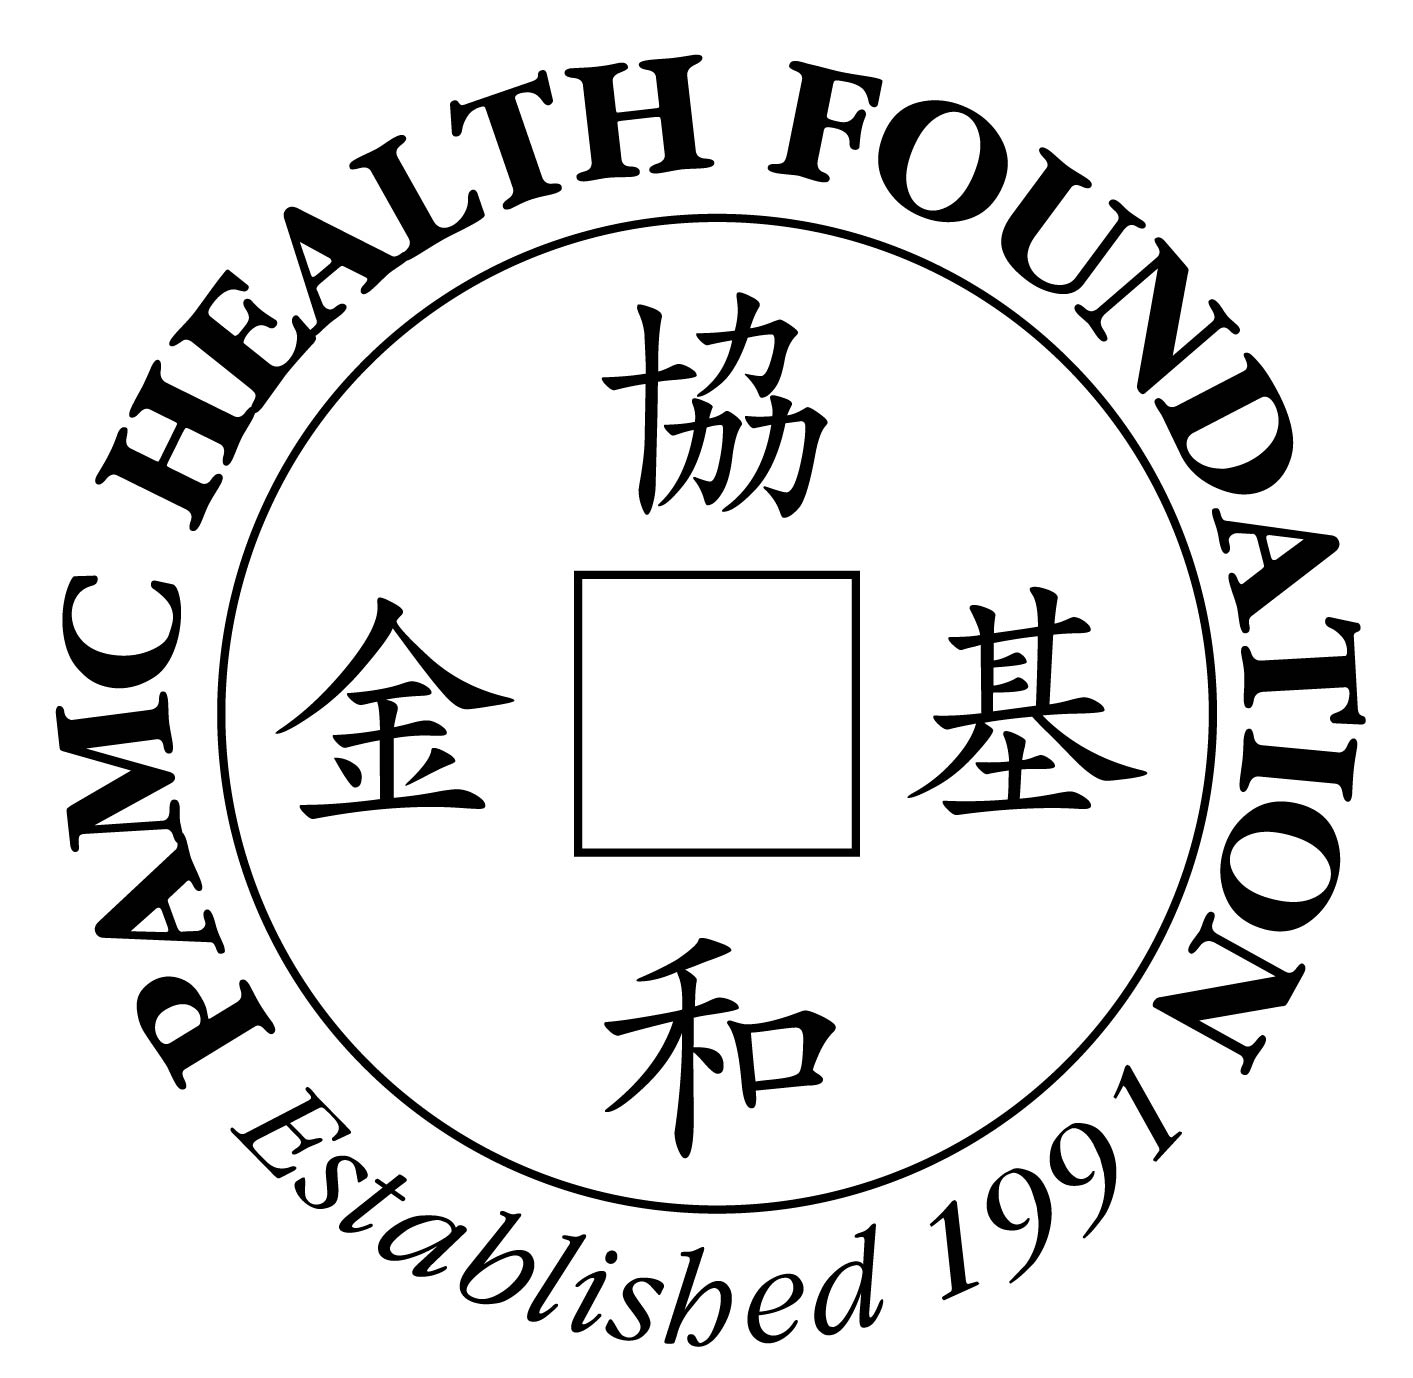 PAMC Health Foundation